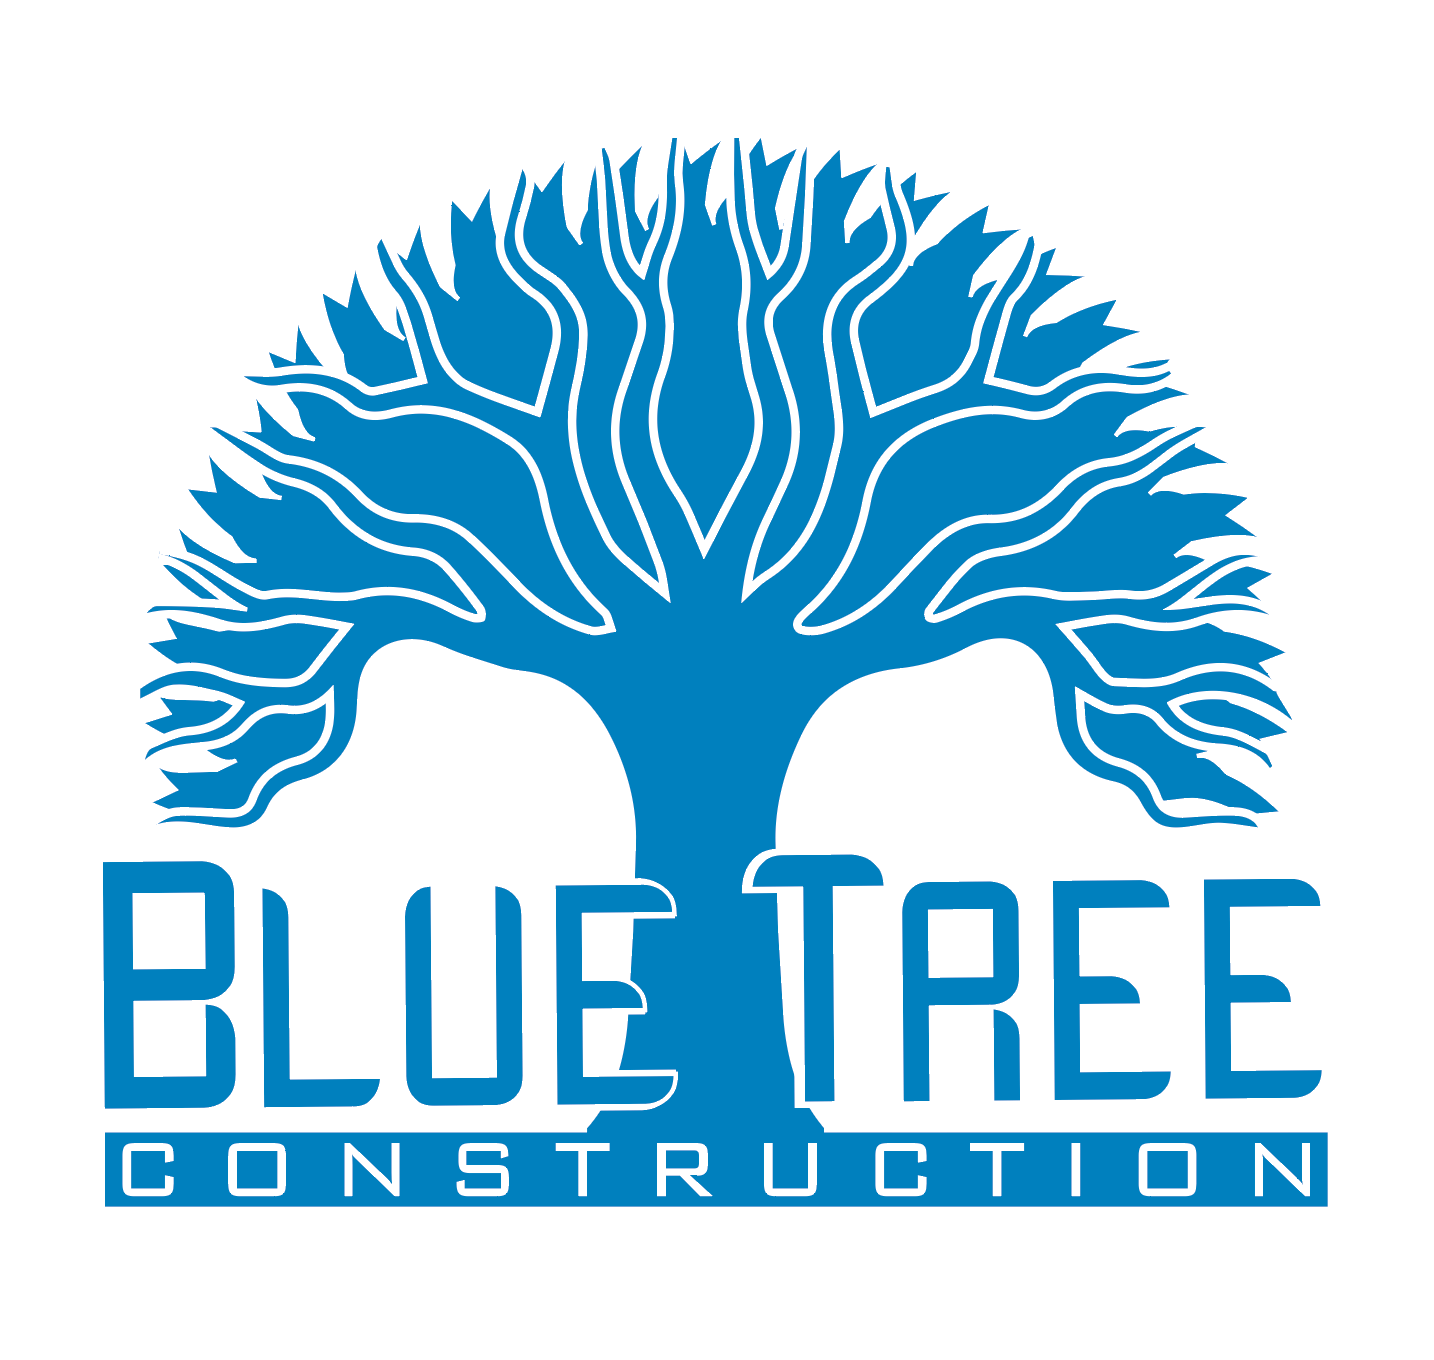 Blue Construction Logo - Logo Design for Blue Tree Construction Design Media